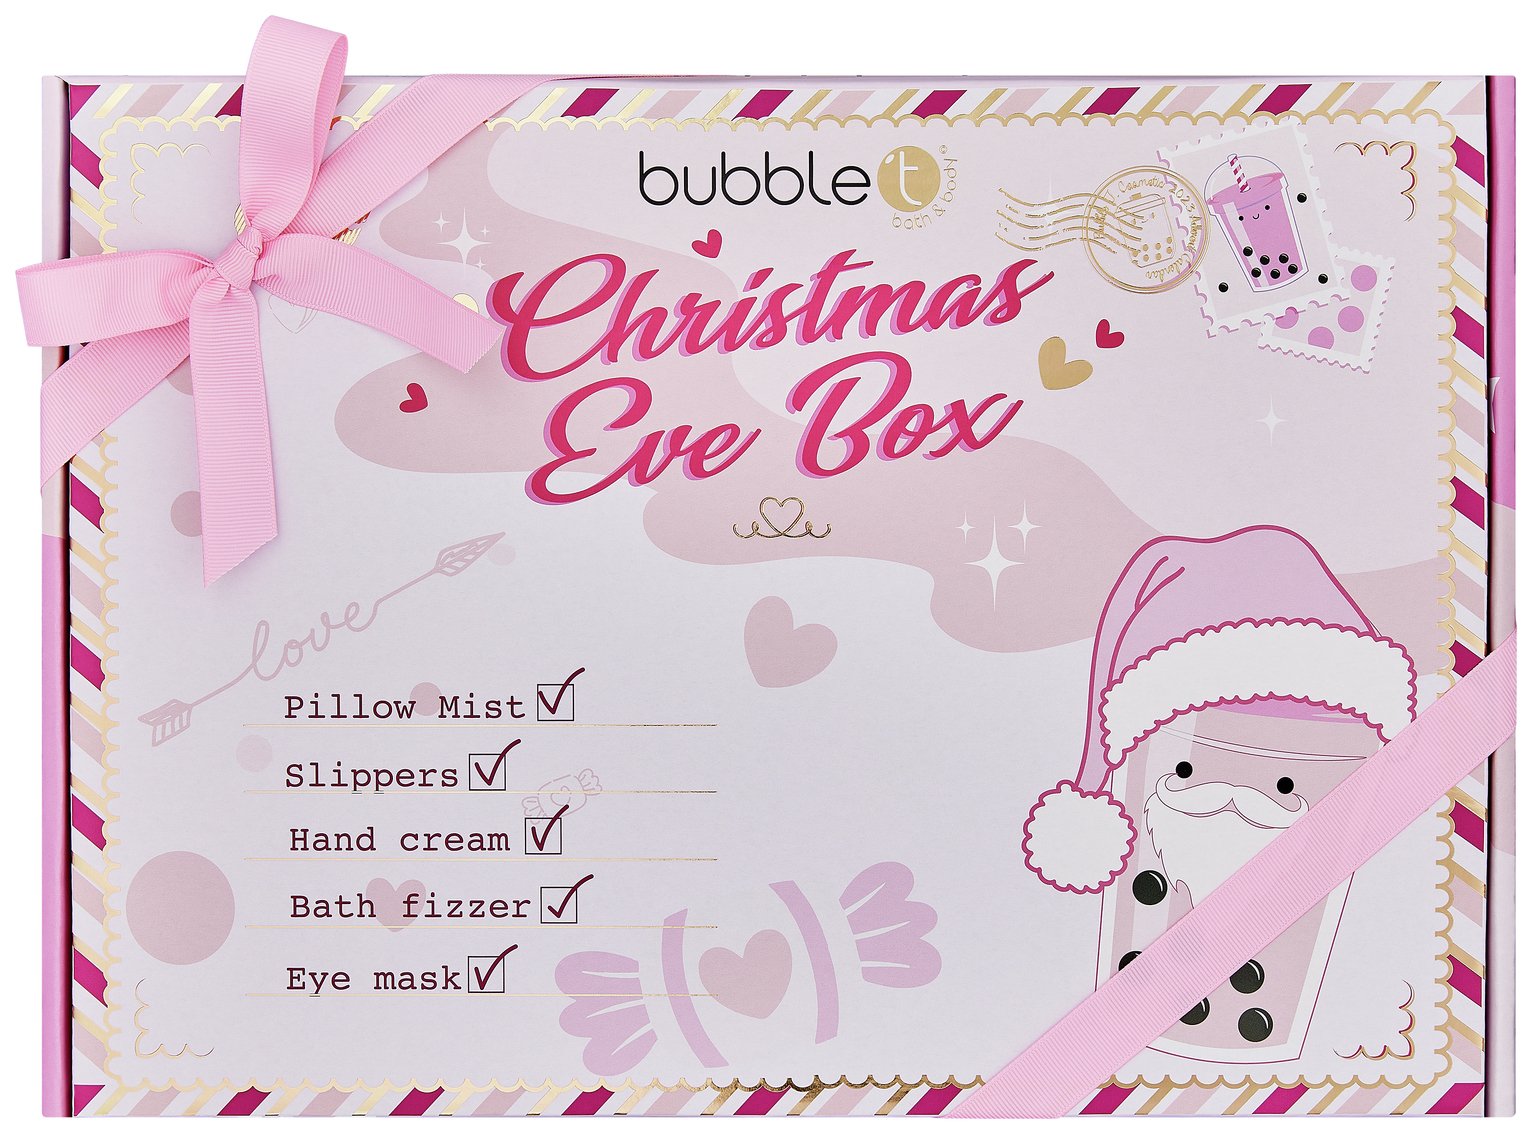 Bubble T Cosmetics Christmas Eve Box